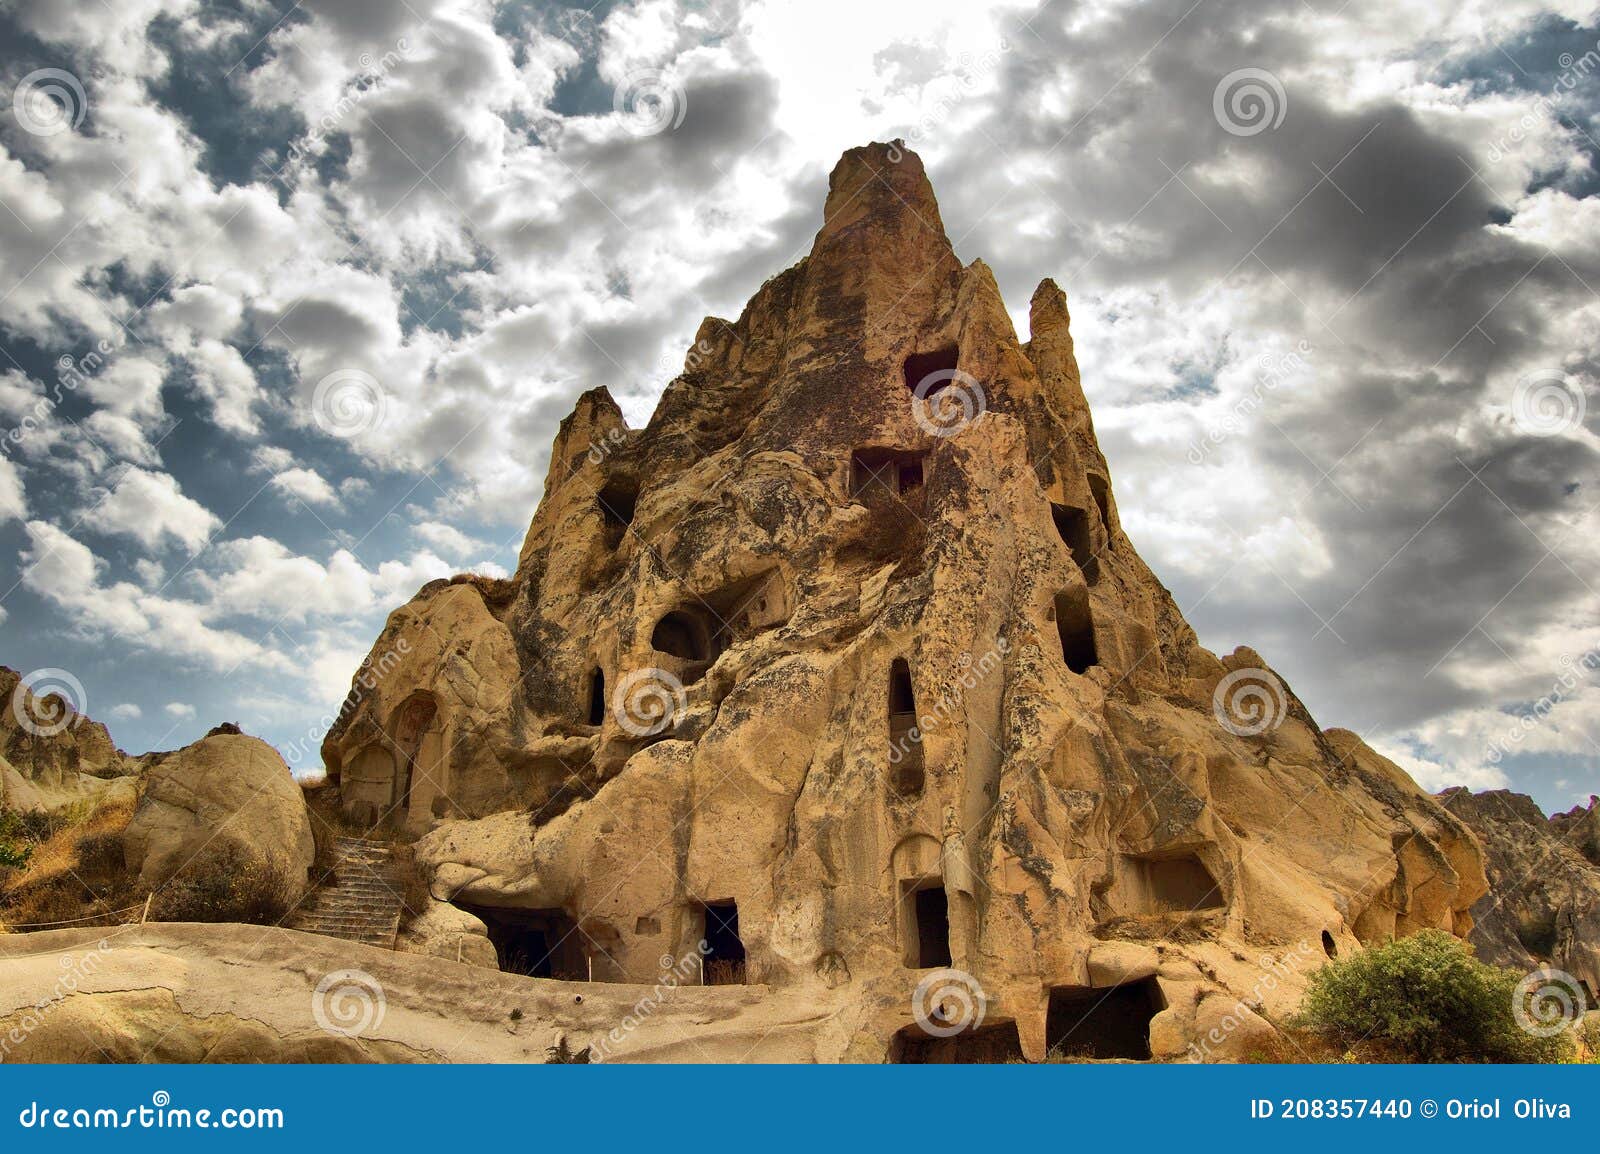 valley of goreme in cappadocia (central anatolia turkey). ancient rock-cut christian byzantine churches.